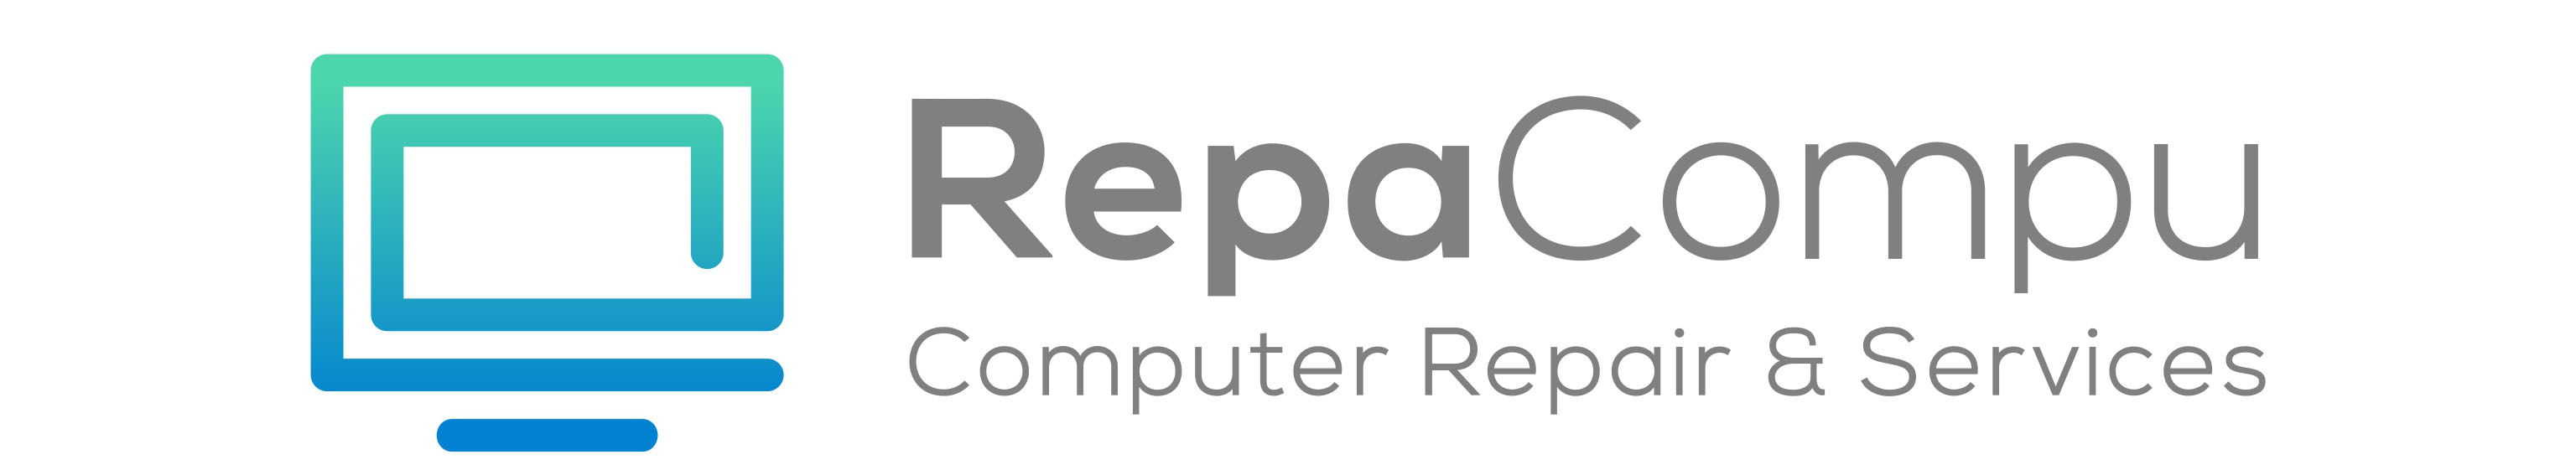 RepaCompu